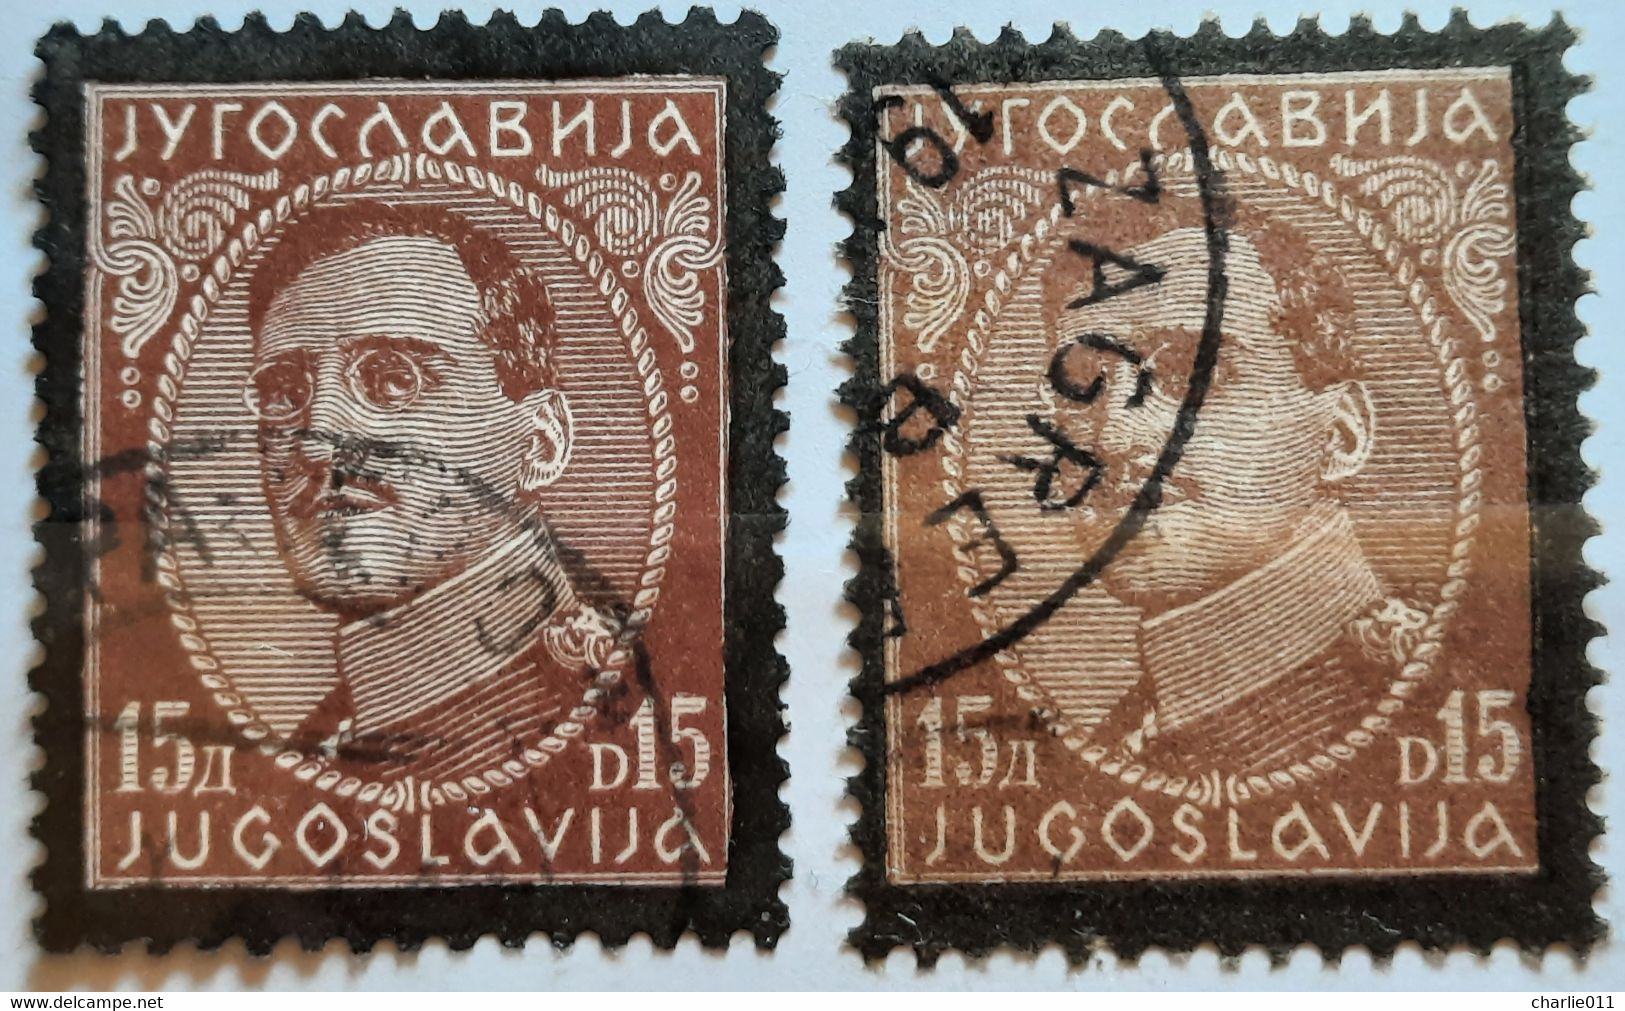 KING ALEXANDER-15 D-BLACK OVERPRINT-VARIATION-YUGOSLAVIA-1934 - Sin Dentar, Pruebas De Impresión Y Variedades